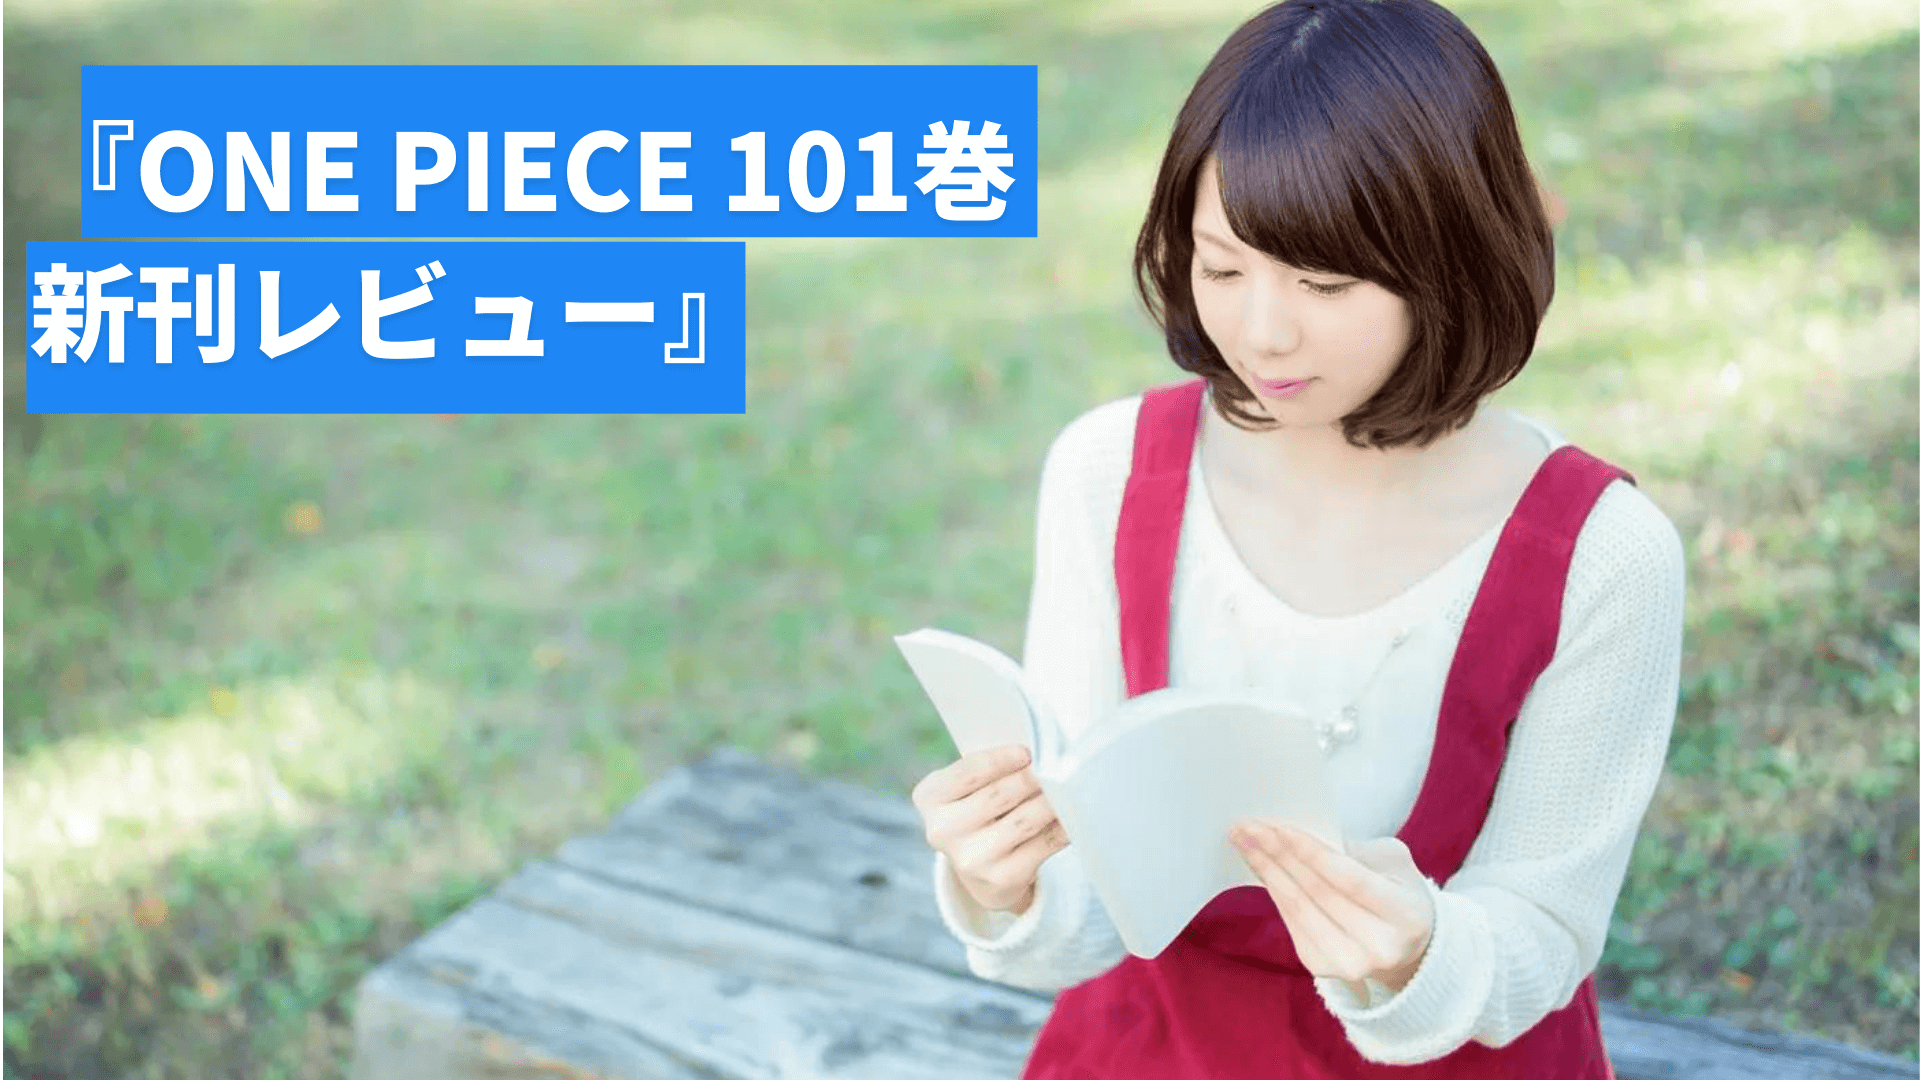 One Piece 101巻 尾田栄一郎 新刊あらすじ レビュー ネタバレあり イマカエ